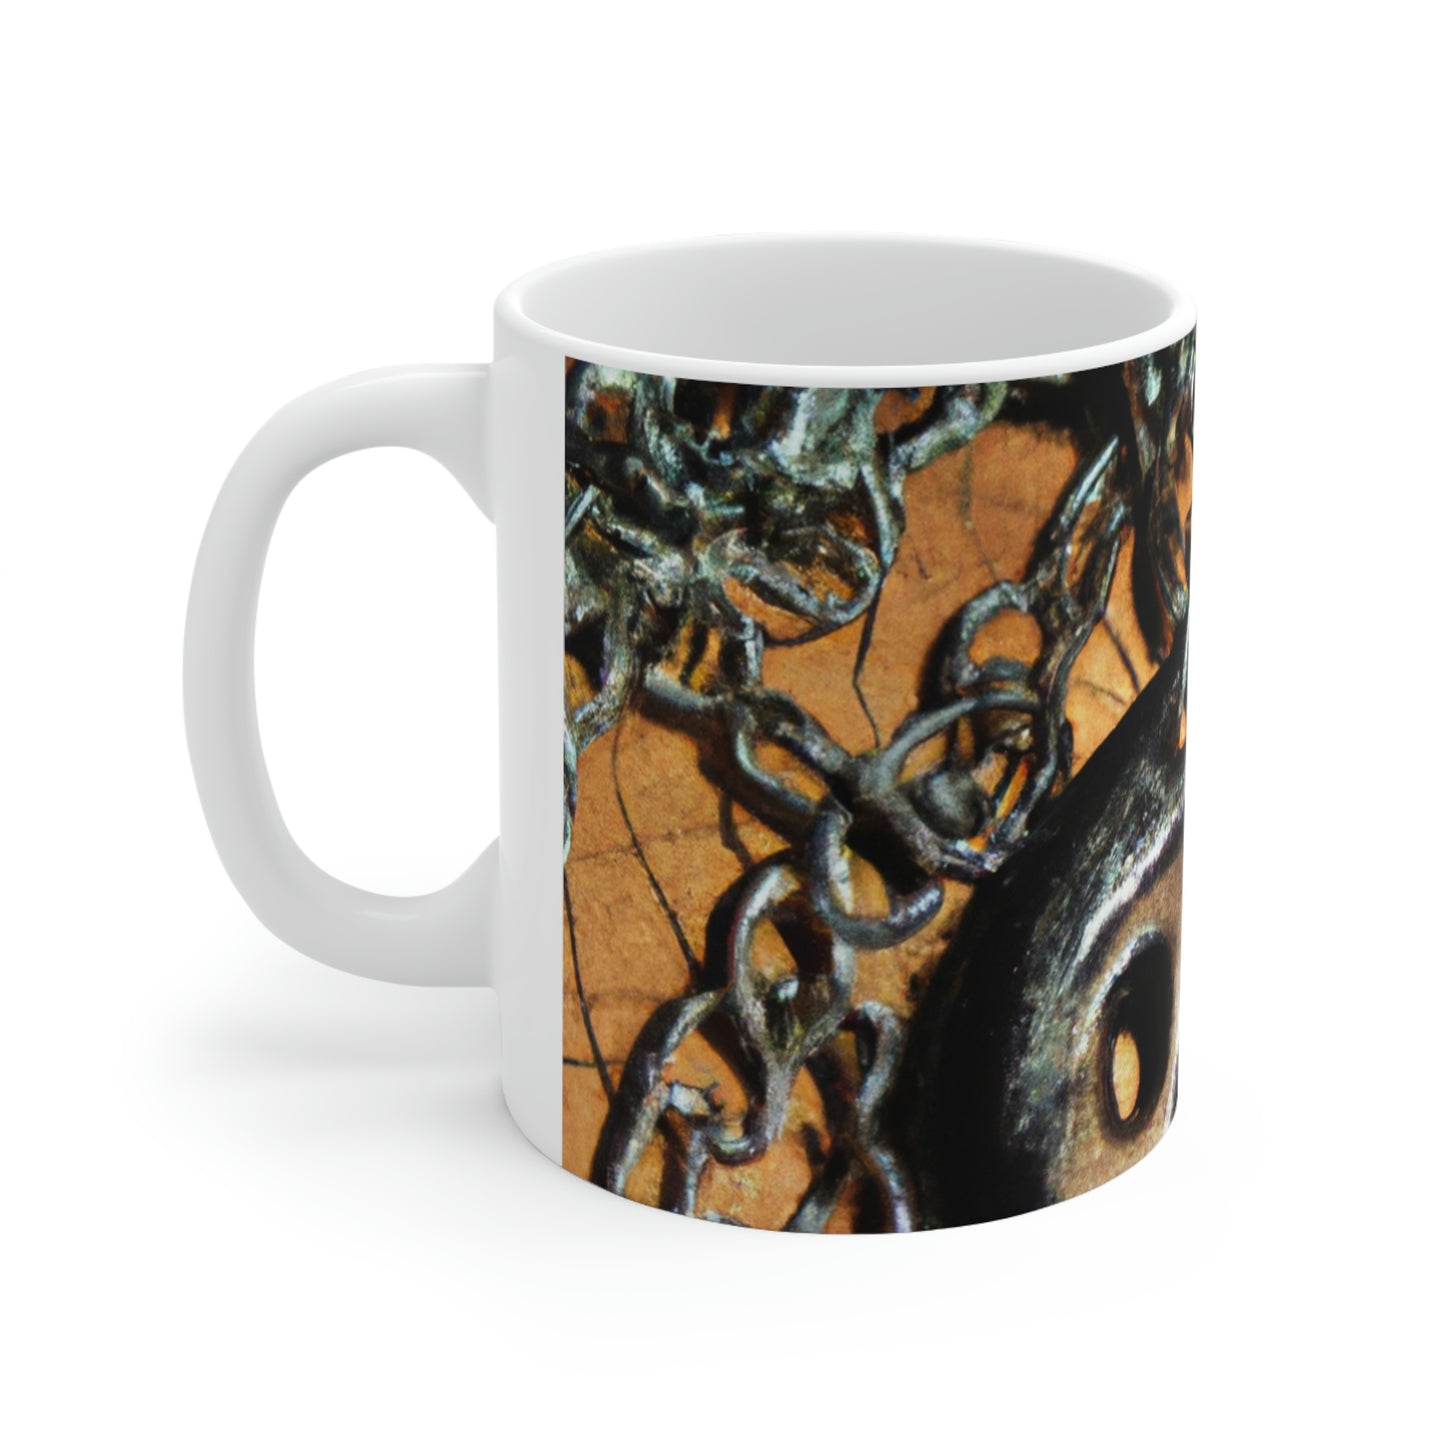 "The Unexpected Bond of the Cursed Amulet" - The Alien Ceramic Mug 11 oz